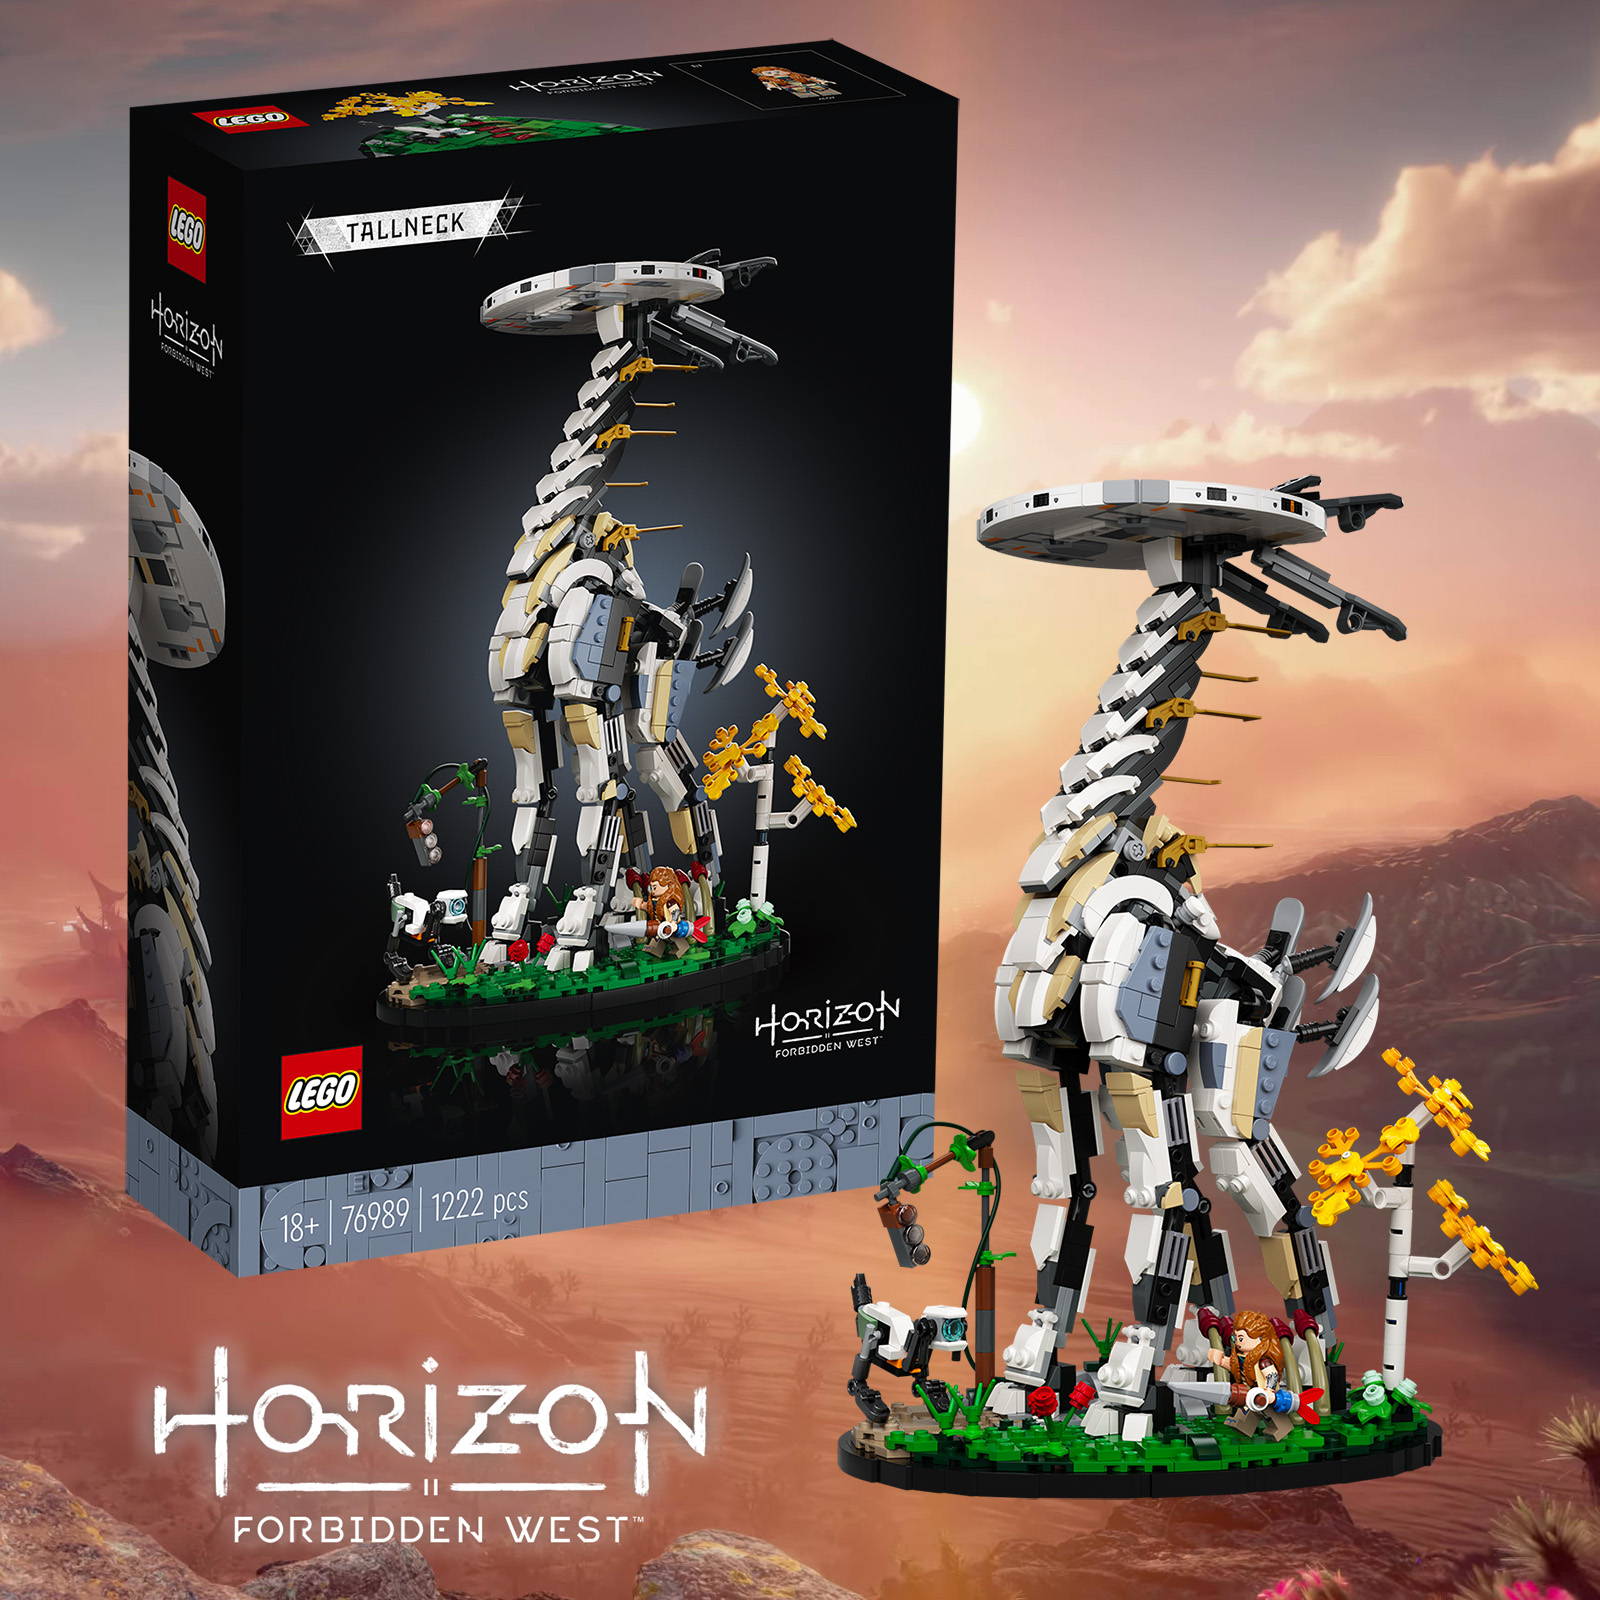 REVIEW: LEGO Horizon Forbidden West: Tallneck set 76989 